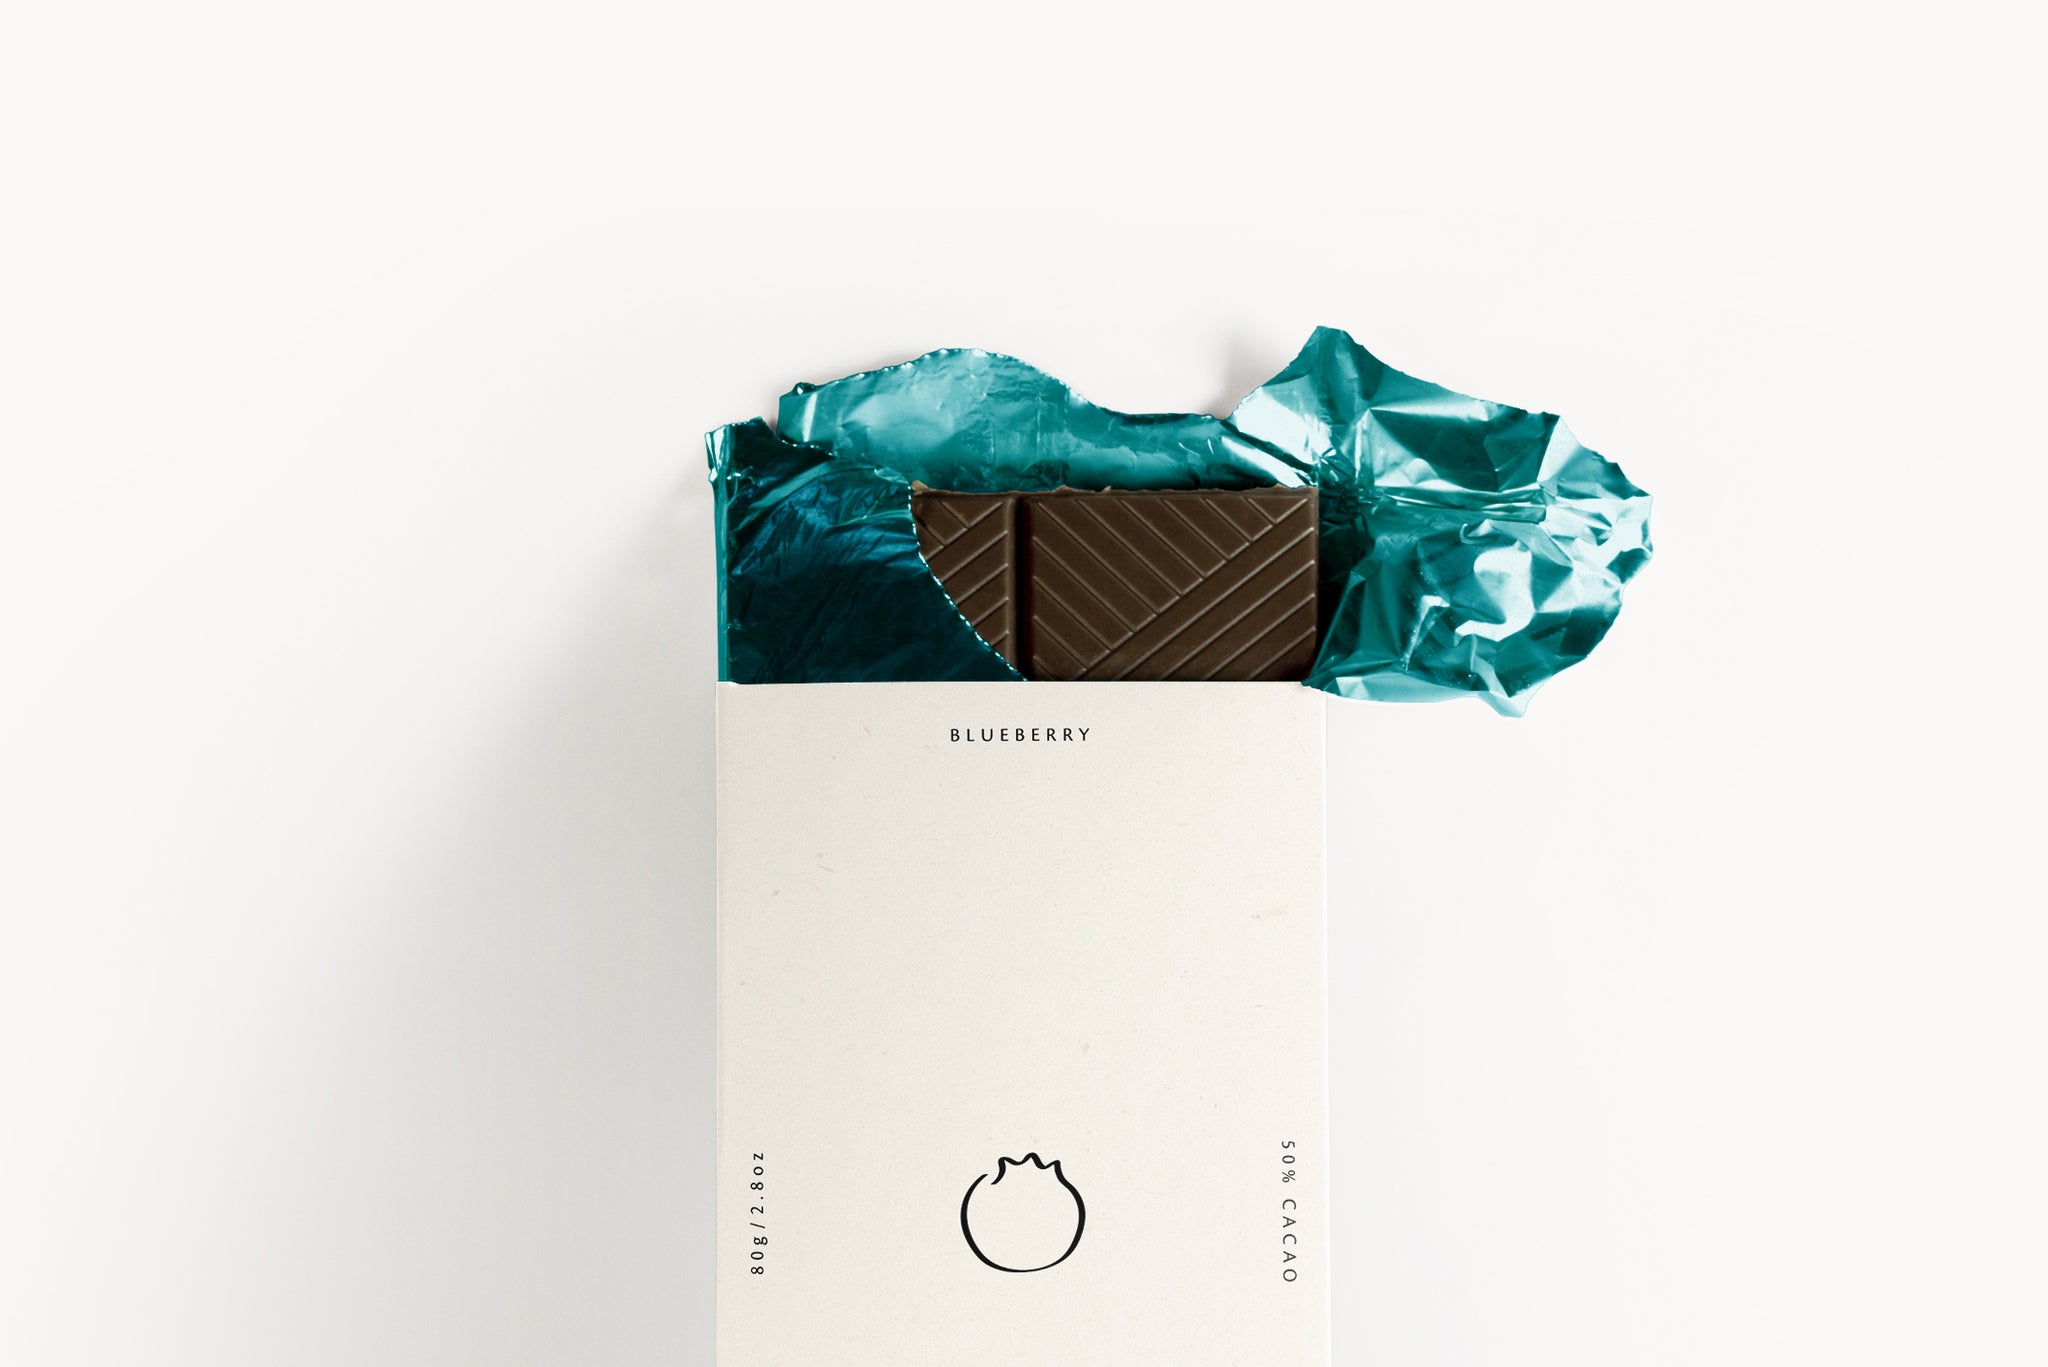 Inspiring minimalist packaging